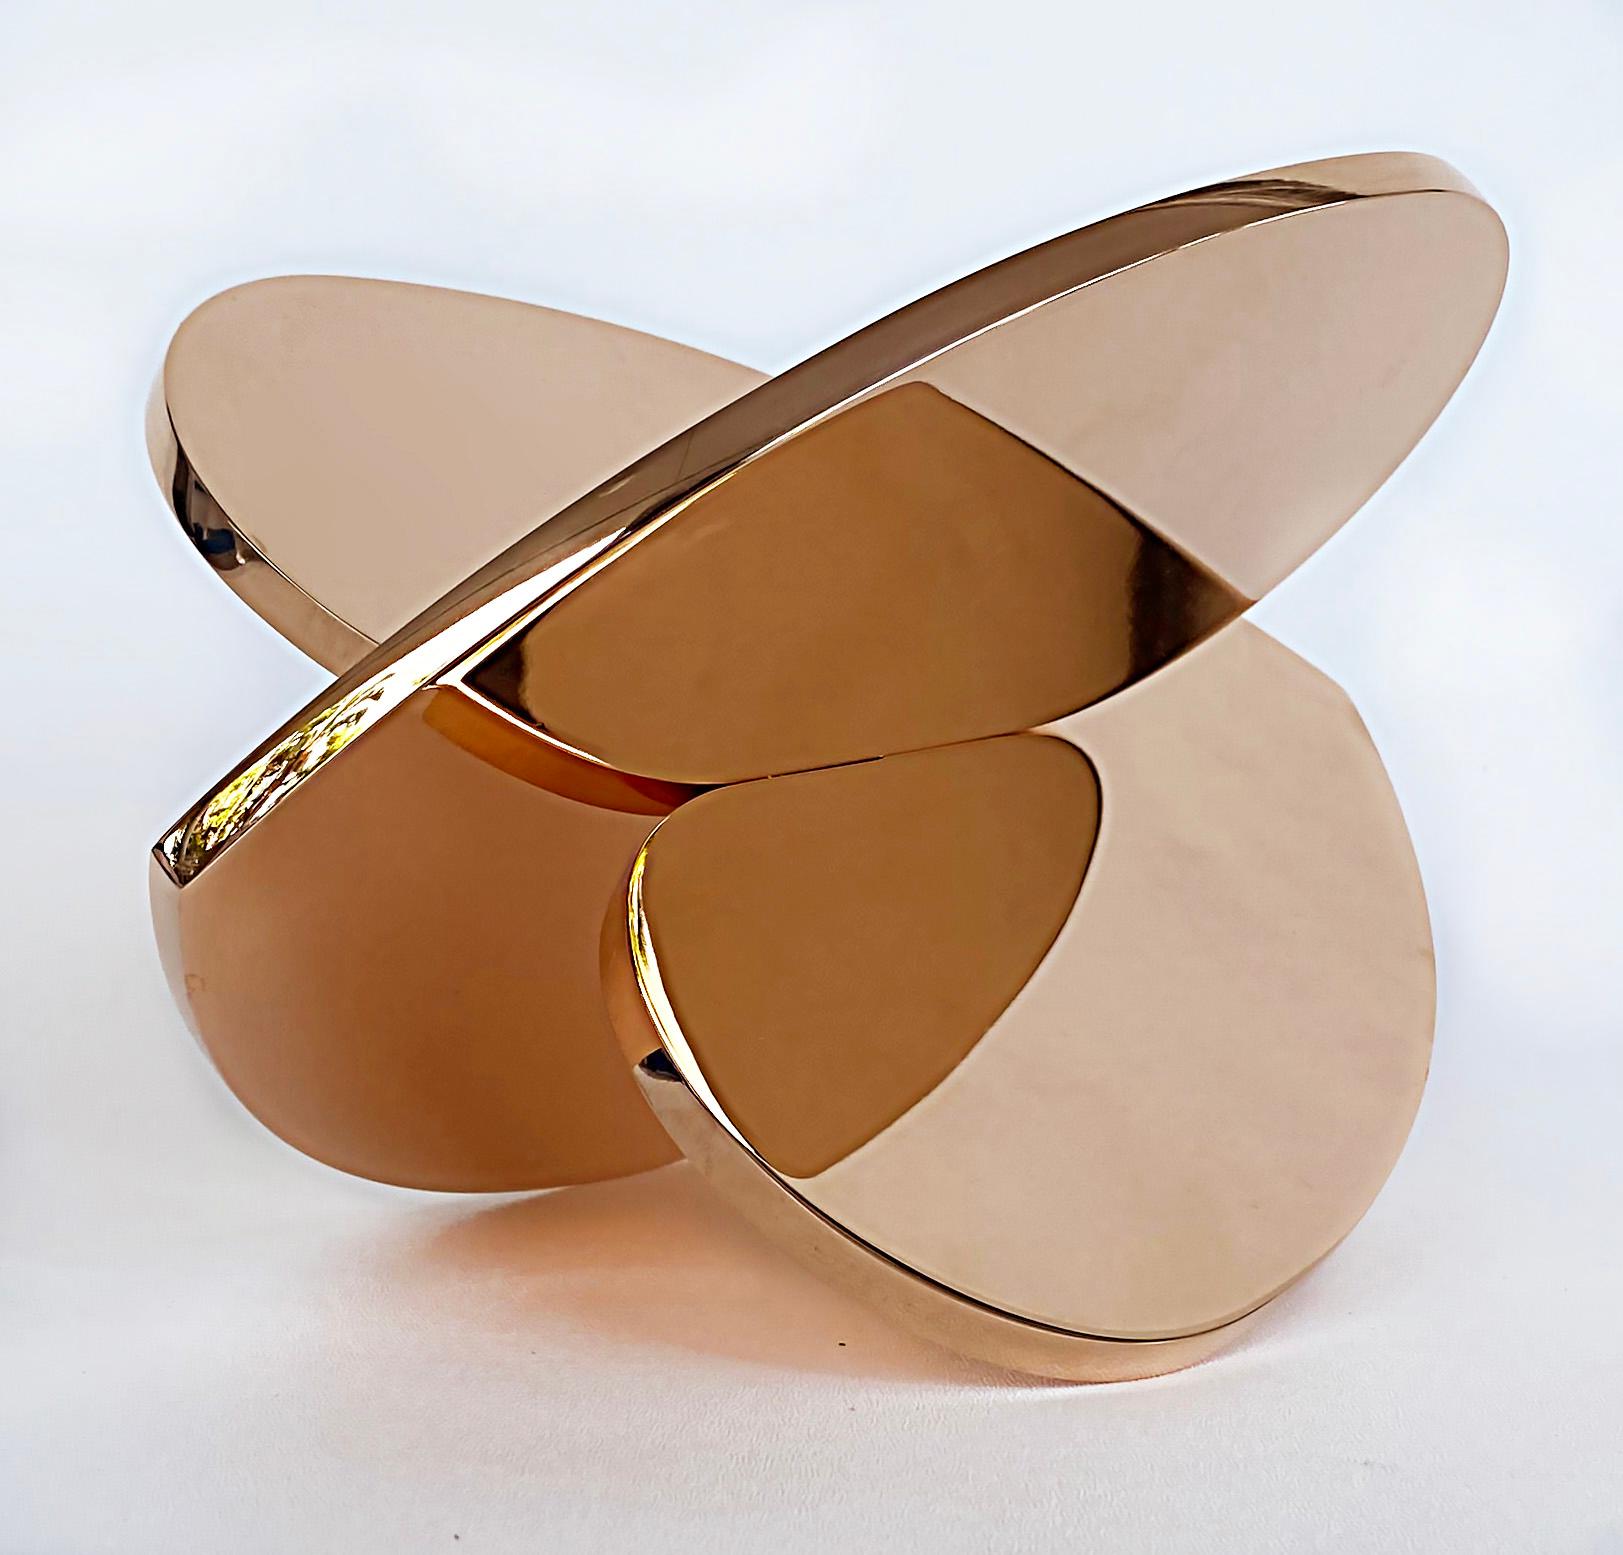 Contemporary Copper Interlocking Heart Sculptures Michael Gitter & Phu Truong, Solid